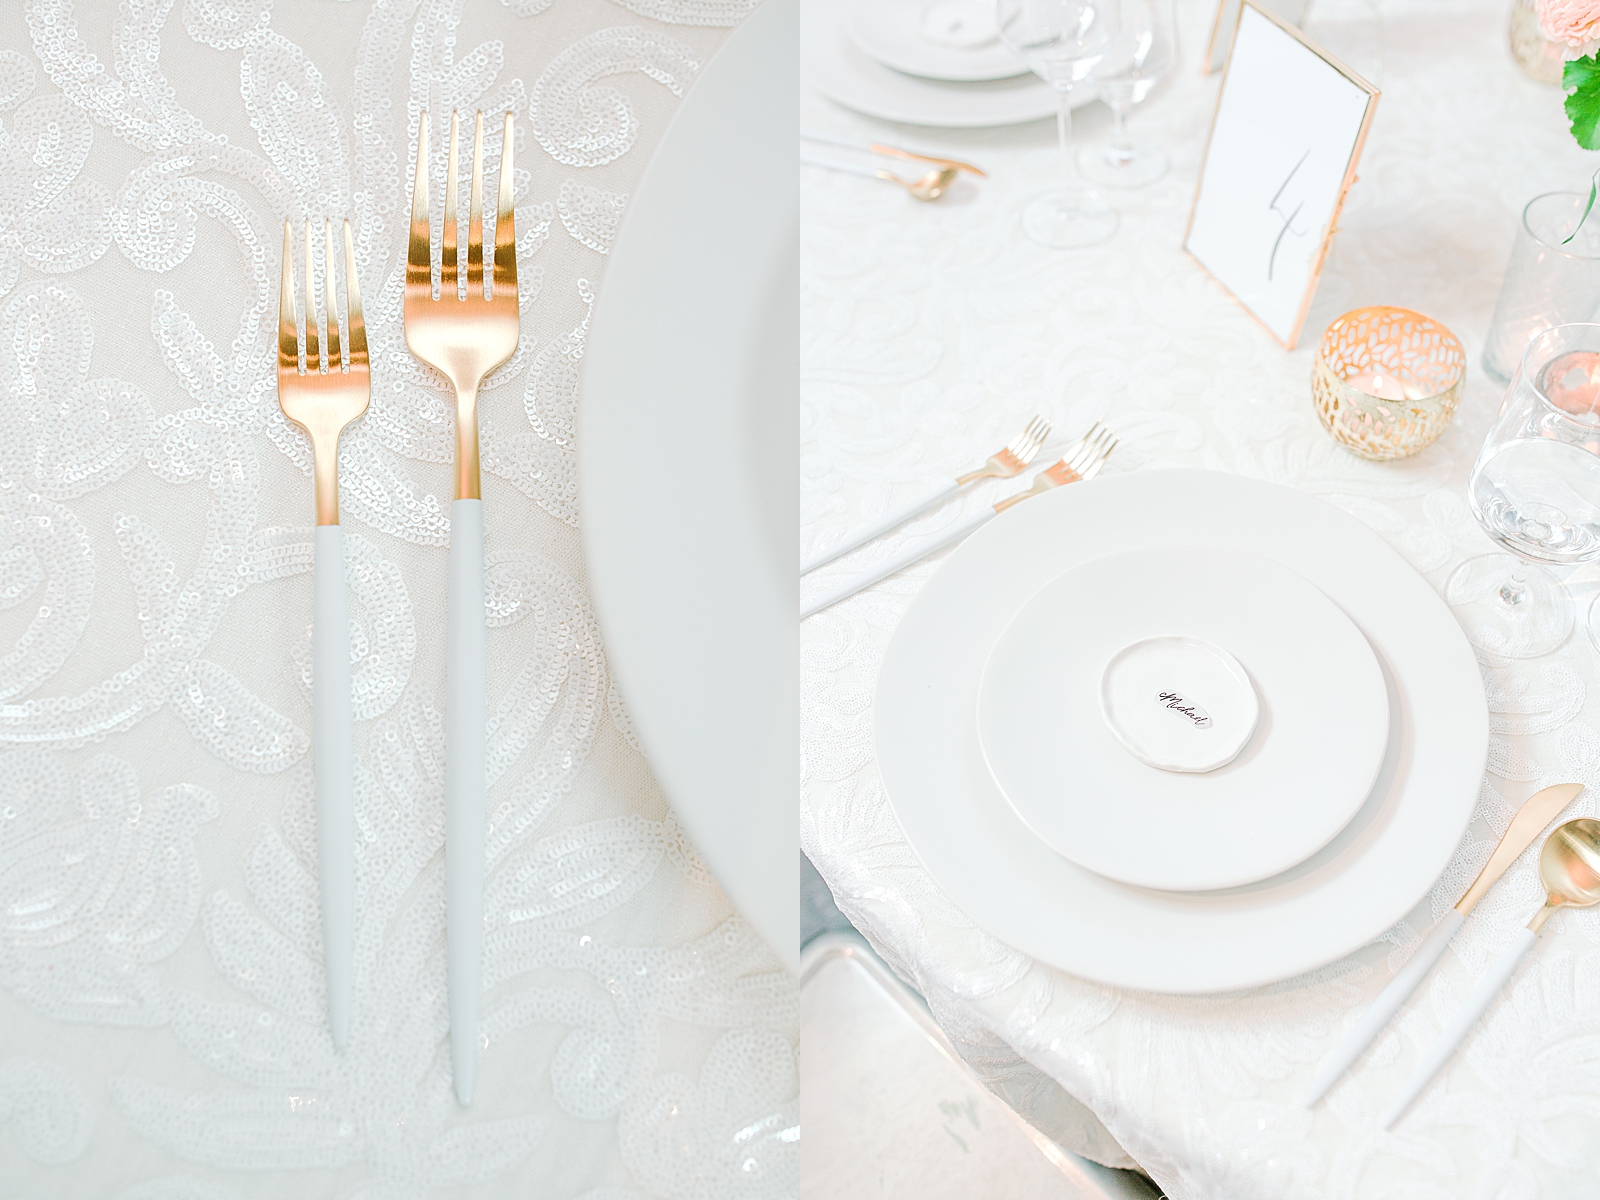 Spring Brickyard Wedding Reception Table Setting Utensils Detail and Plates Detail Photos